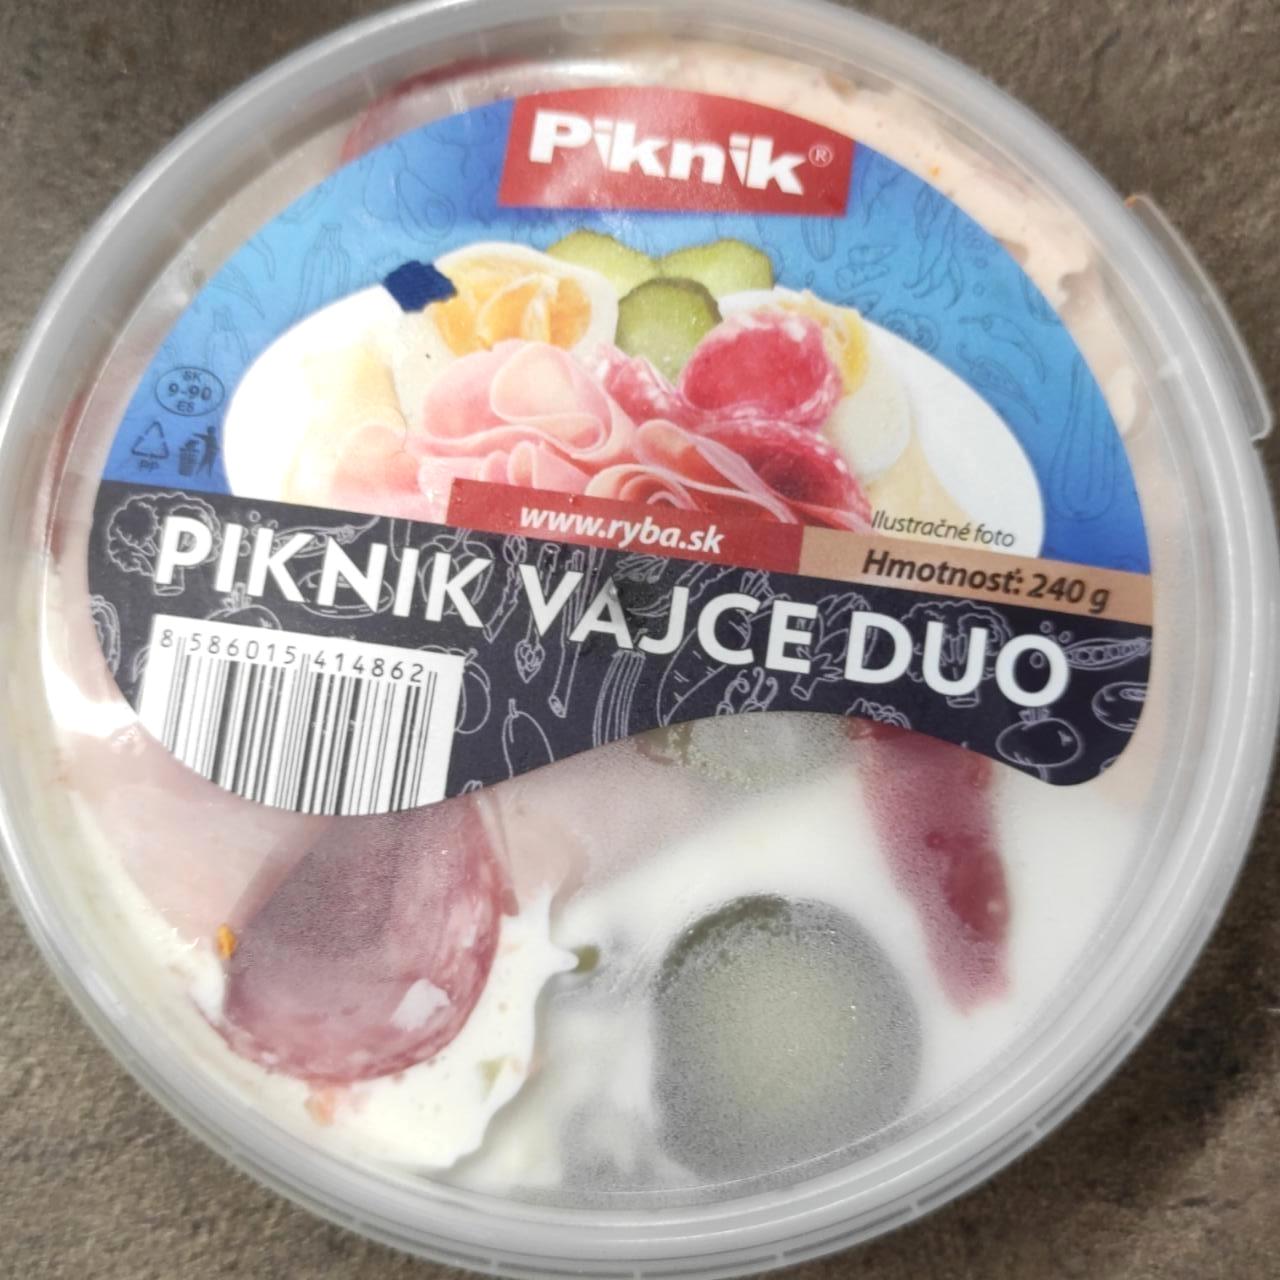 Képek - Piknik vajce duo Piknik